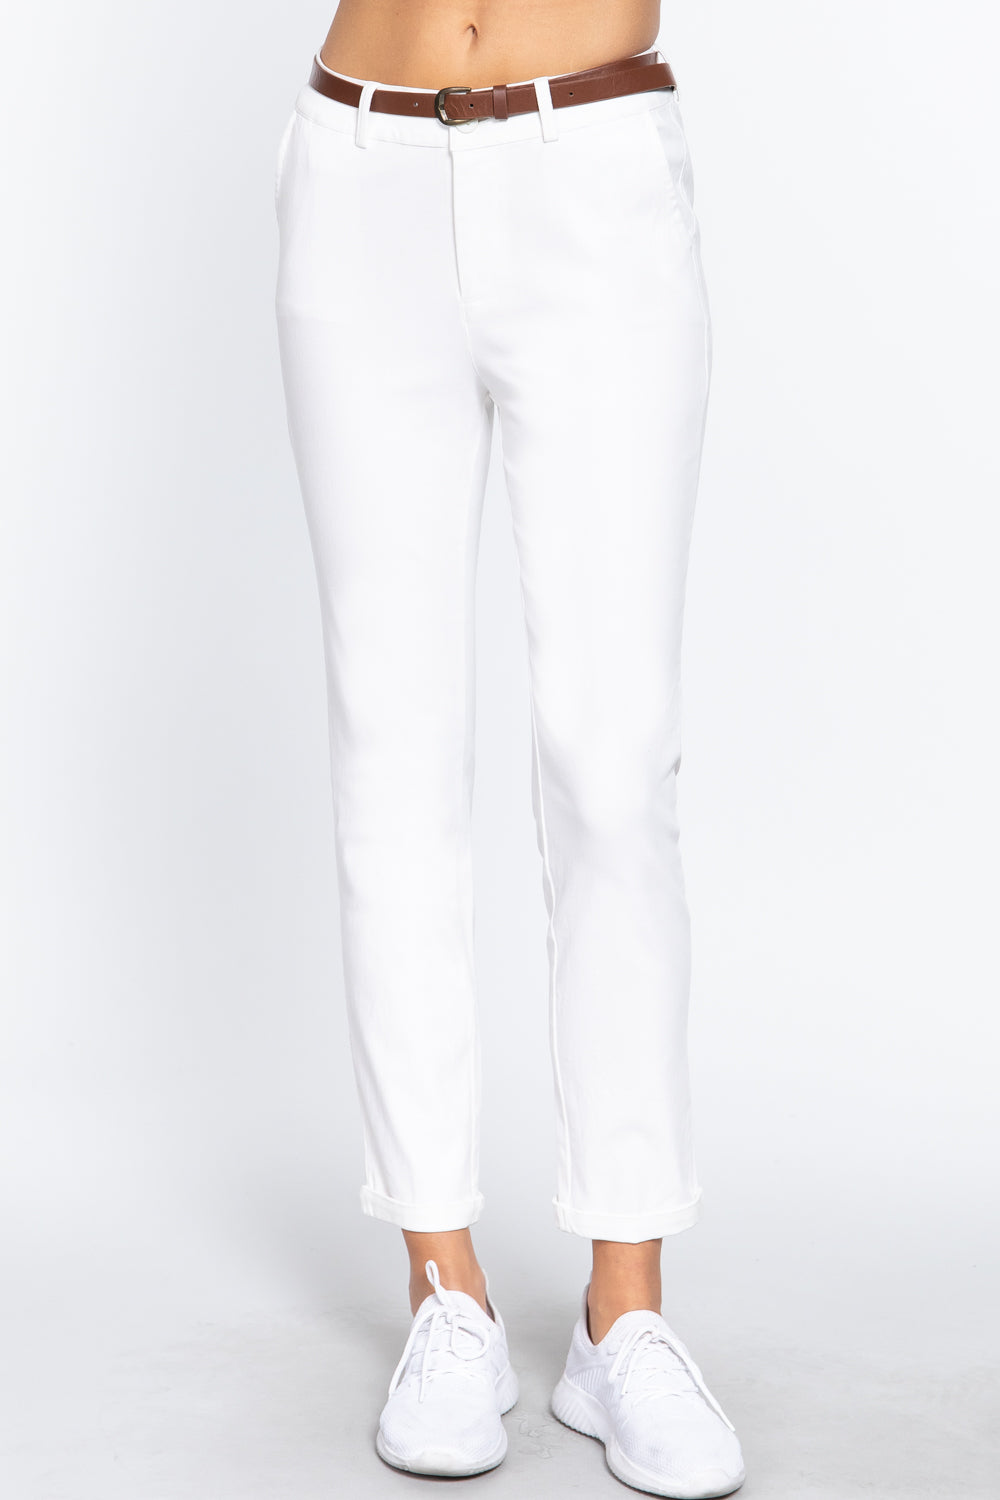 Cotton-span Twill Belted Long Pants - Tigbuls Variety Fashion